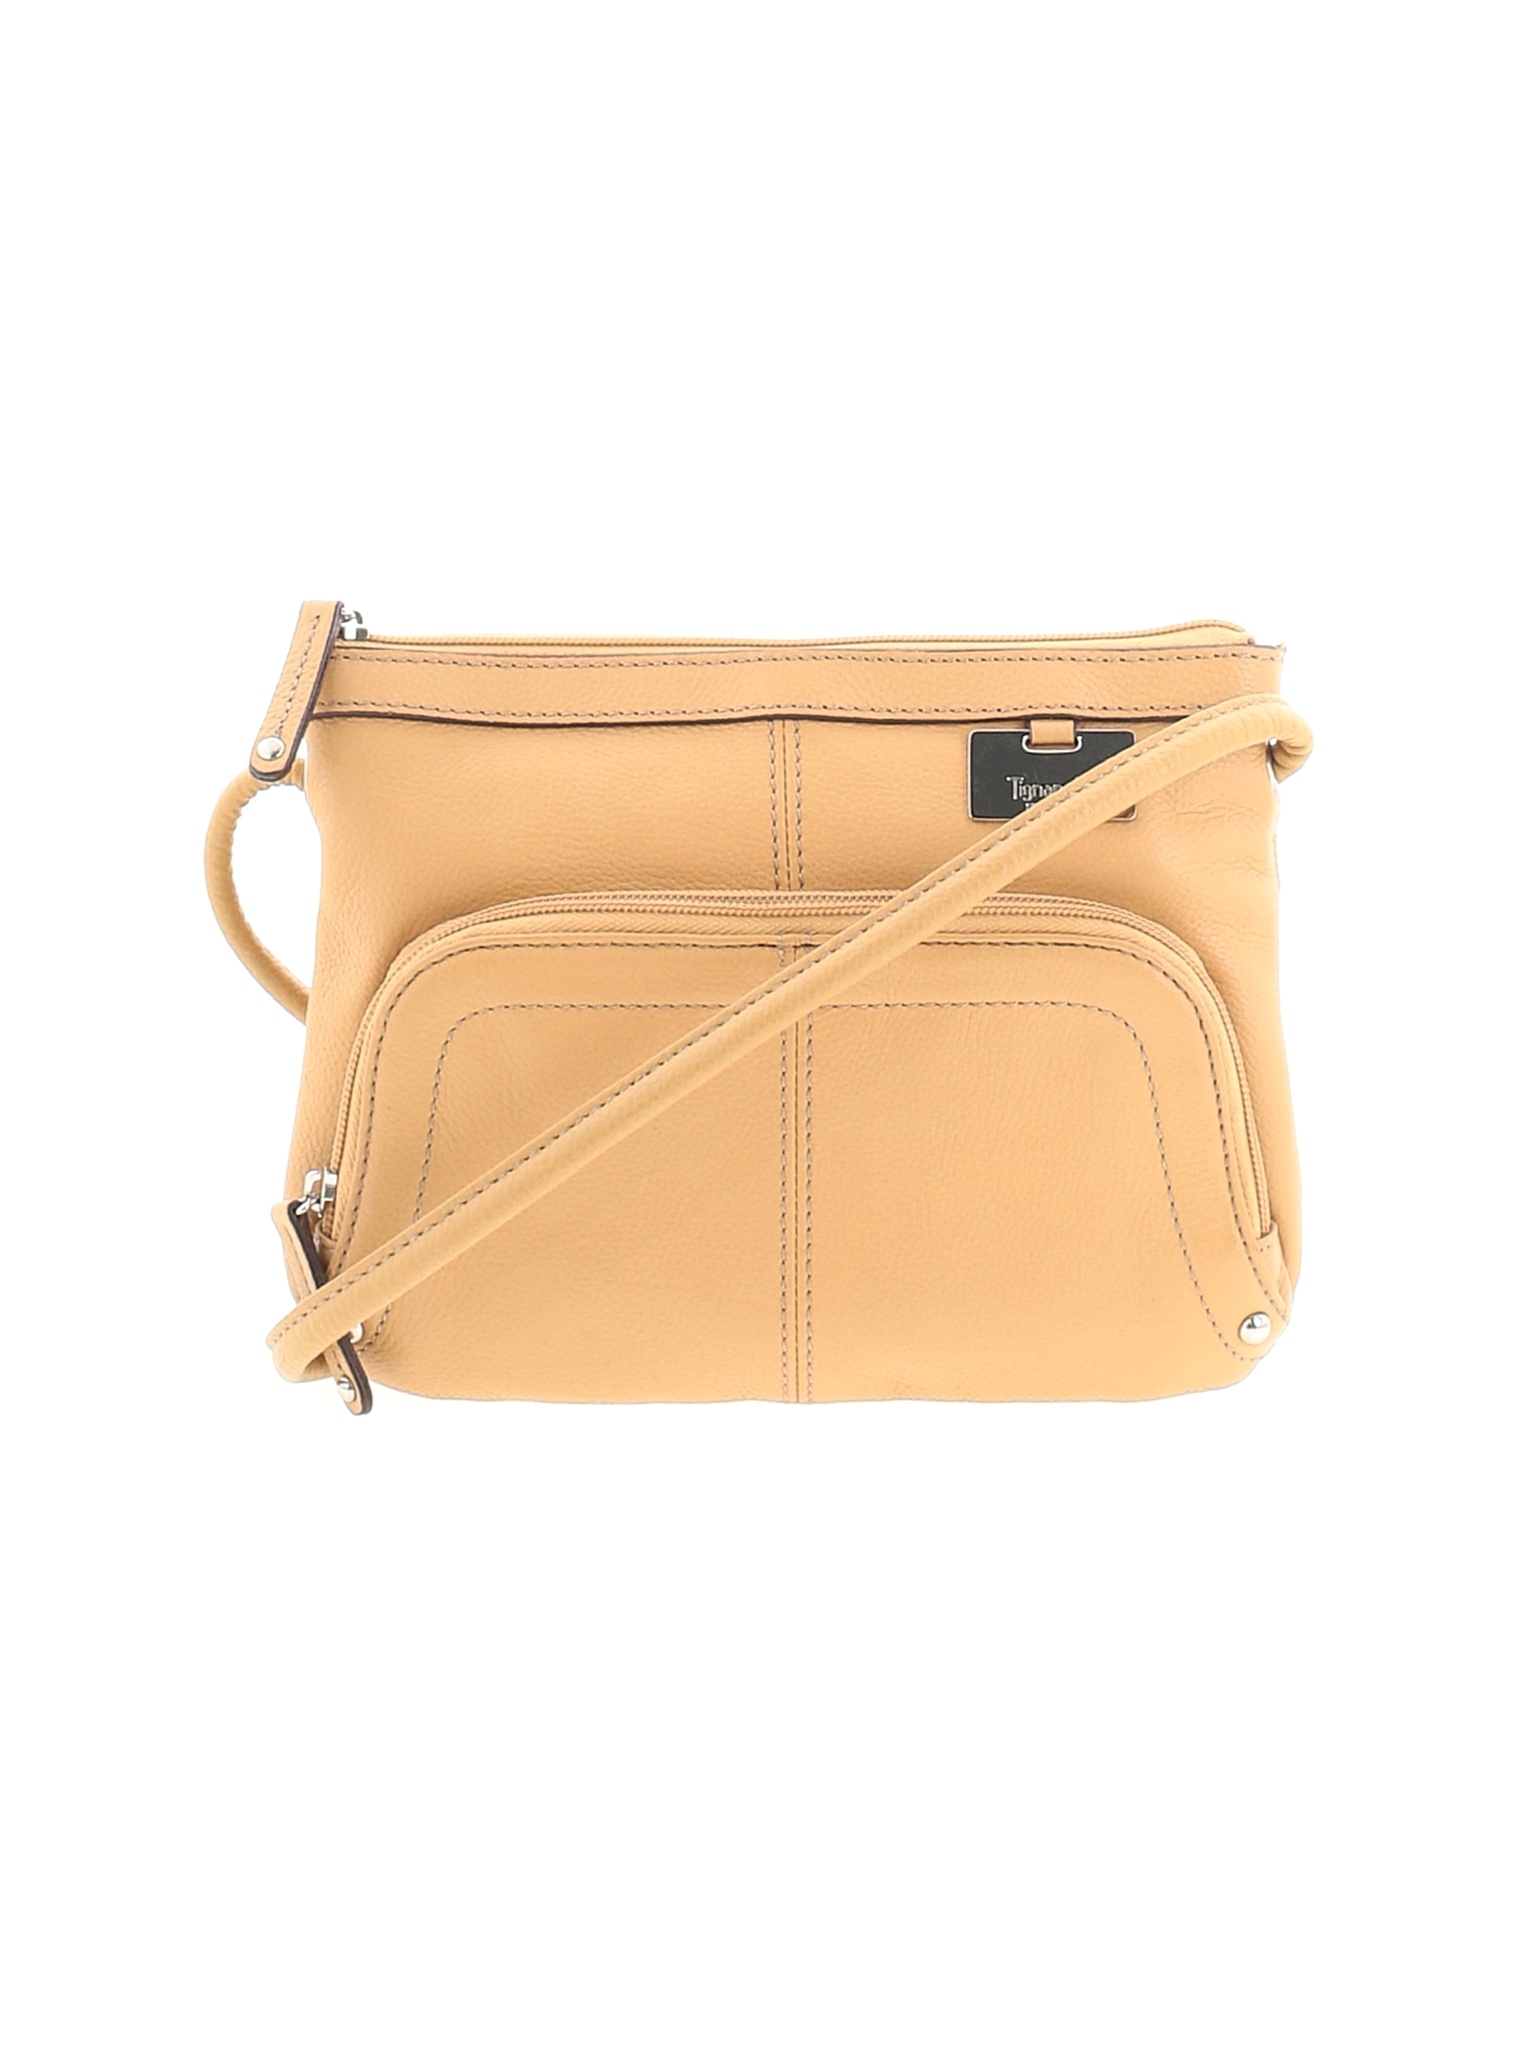 Tignanello Women Orange Leather Crossbody Bag One Size | eBay